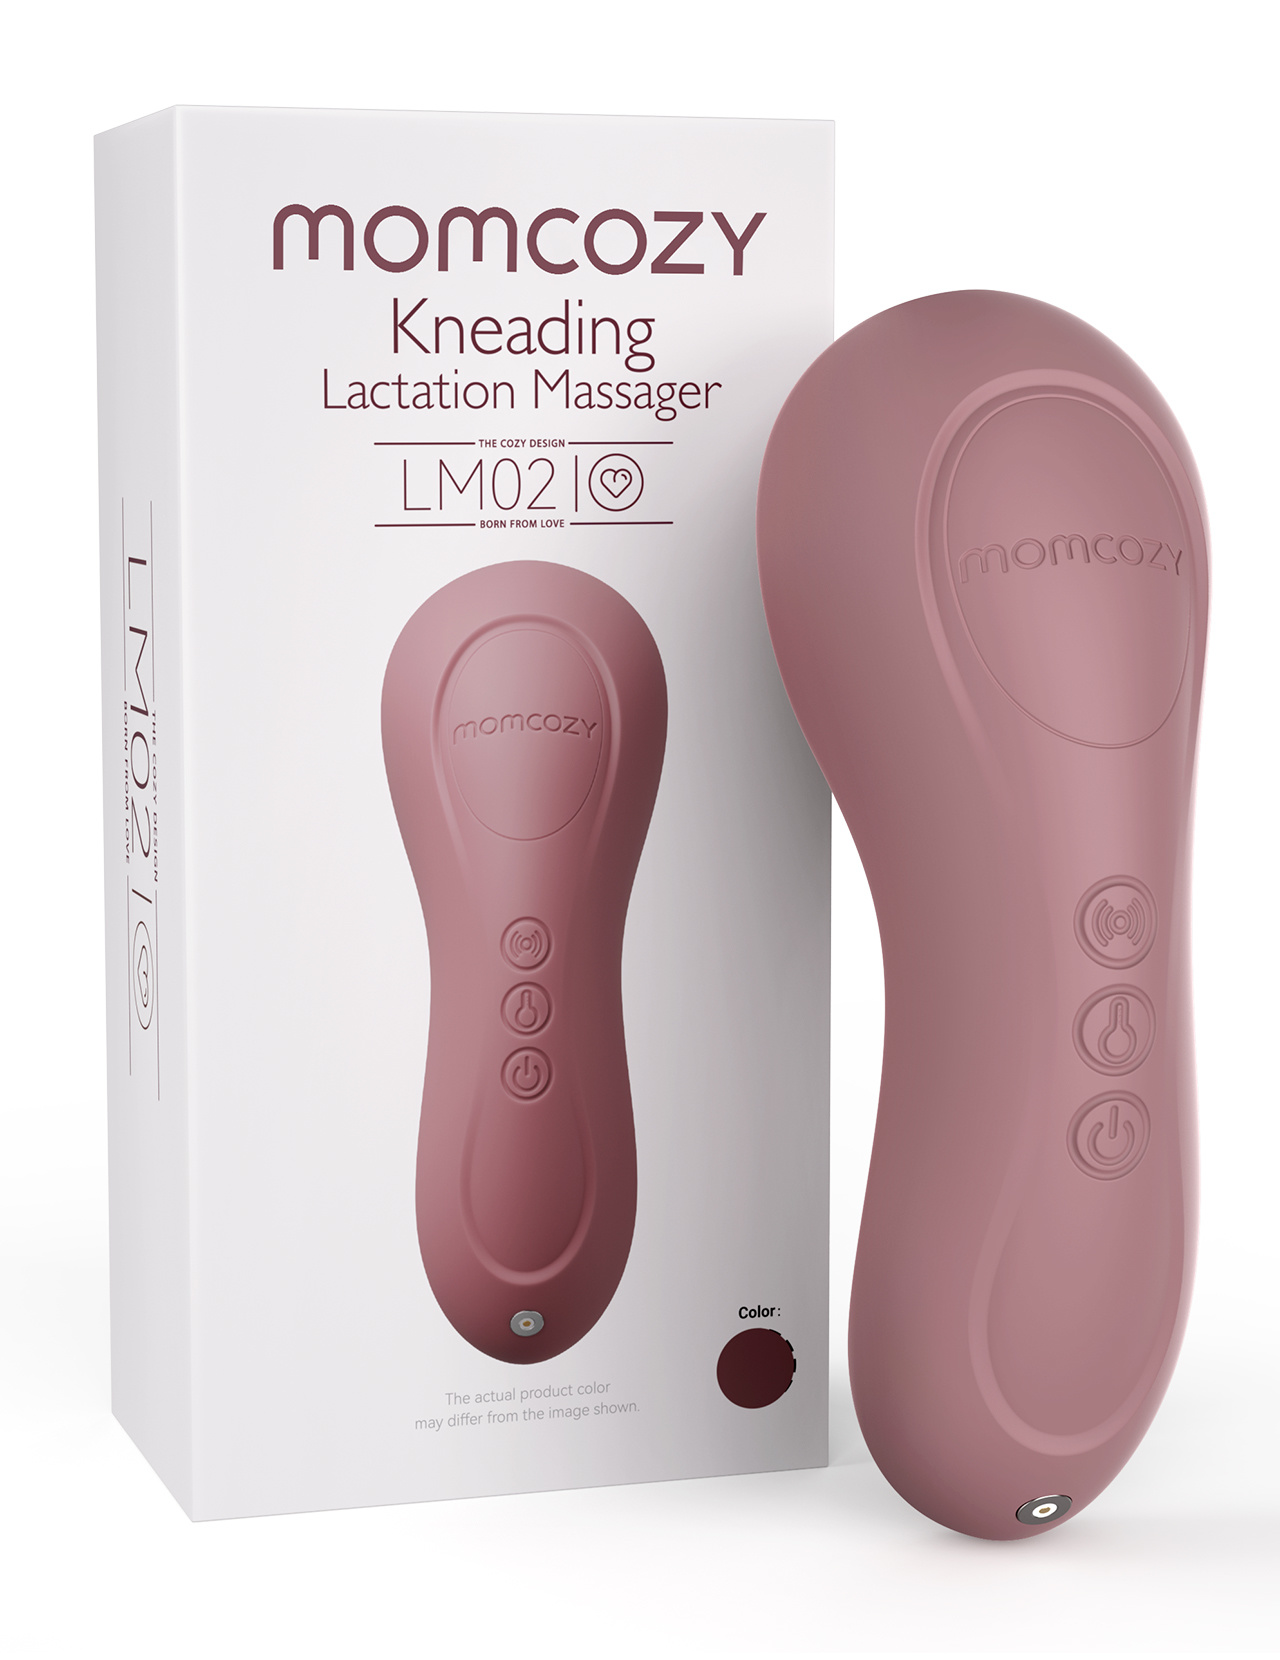 Product: The Momcozy lactation breastfeeding massager — Little